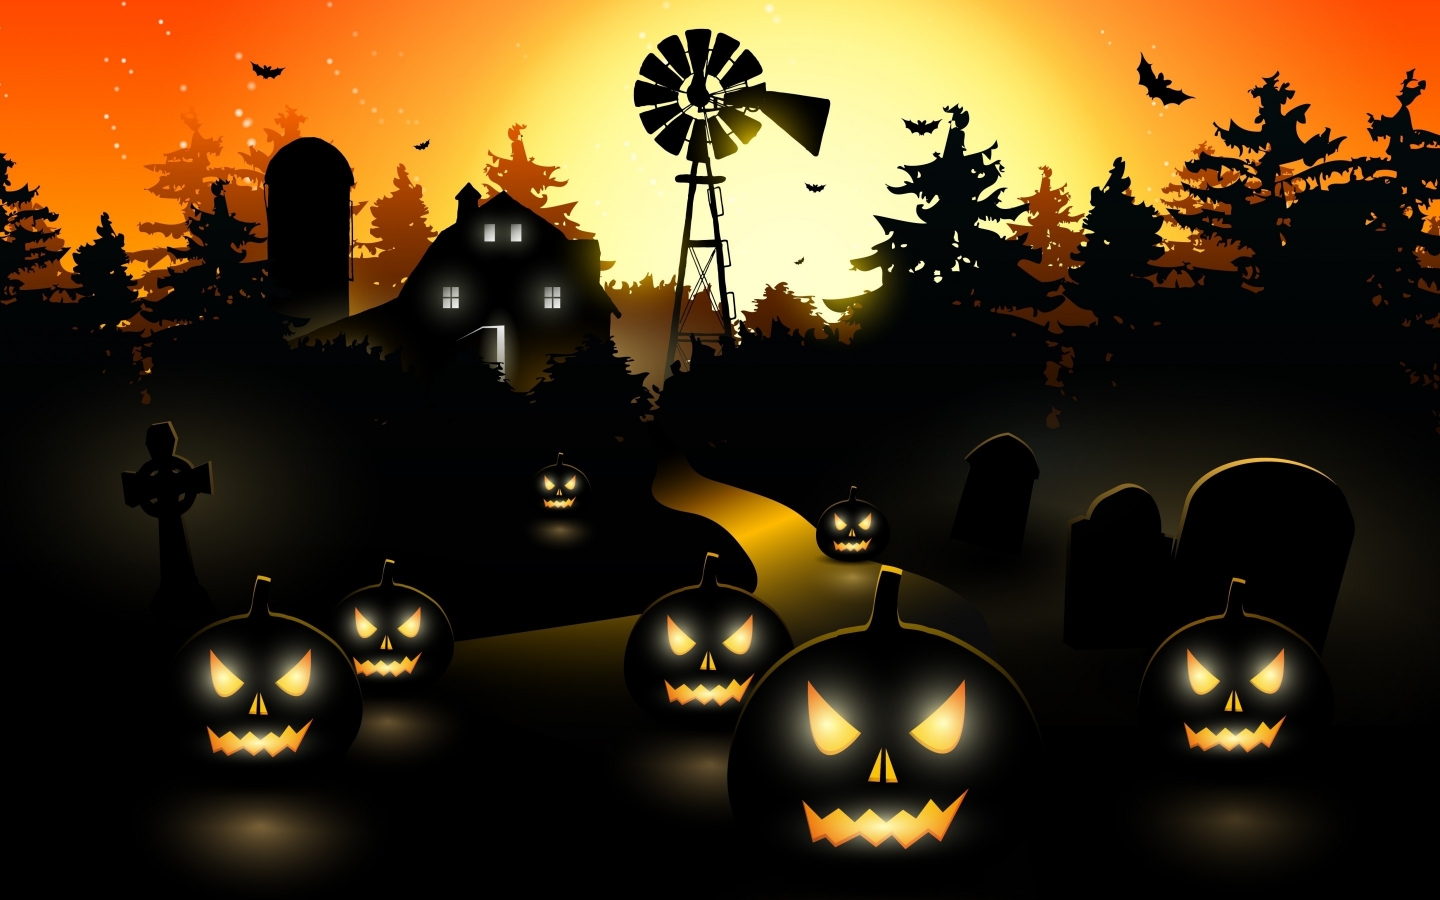 Halloween Black City for 1440 x 900 widescreen resolution